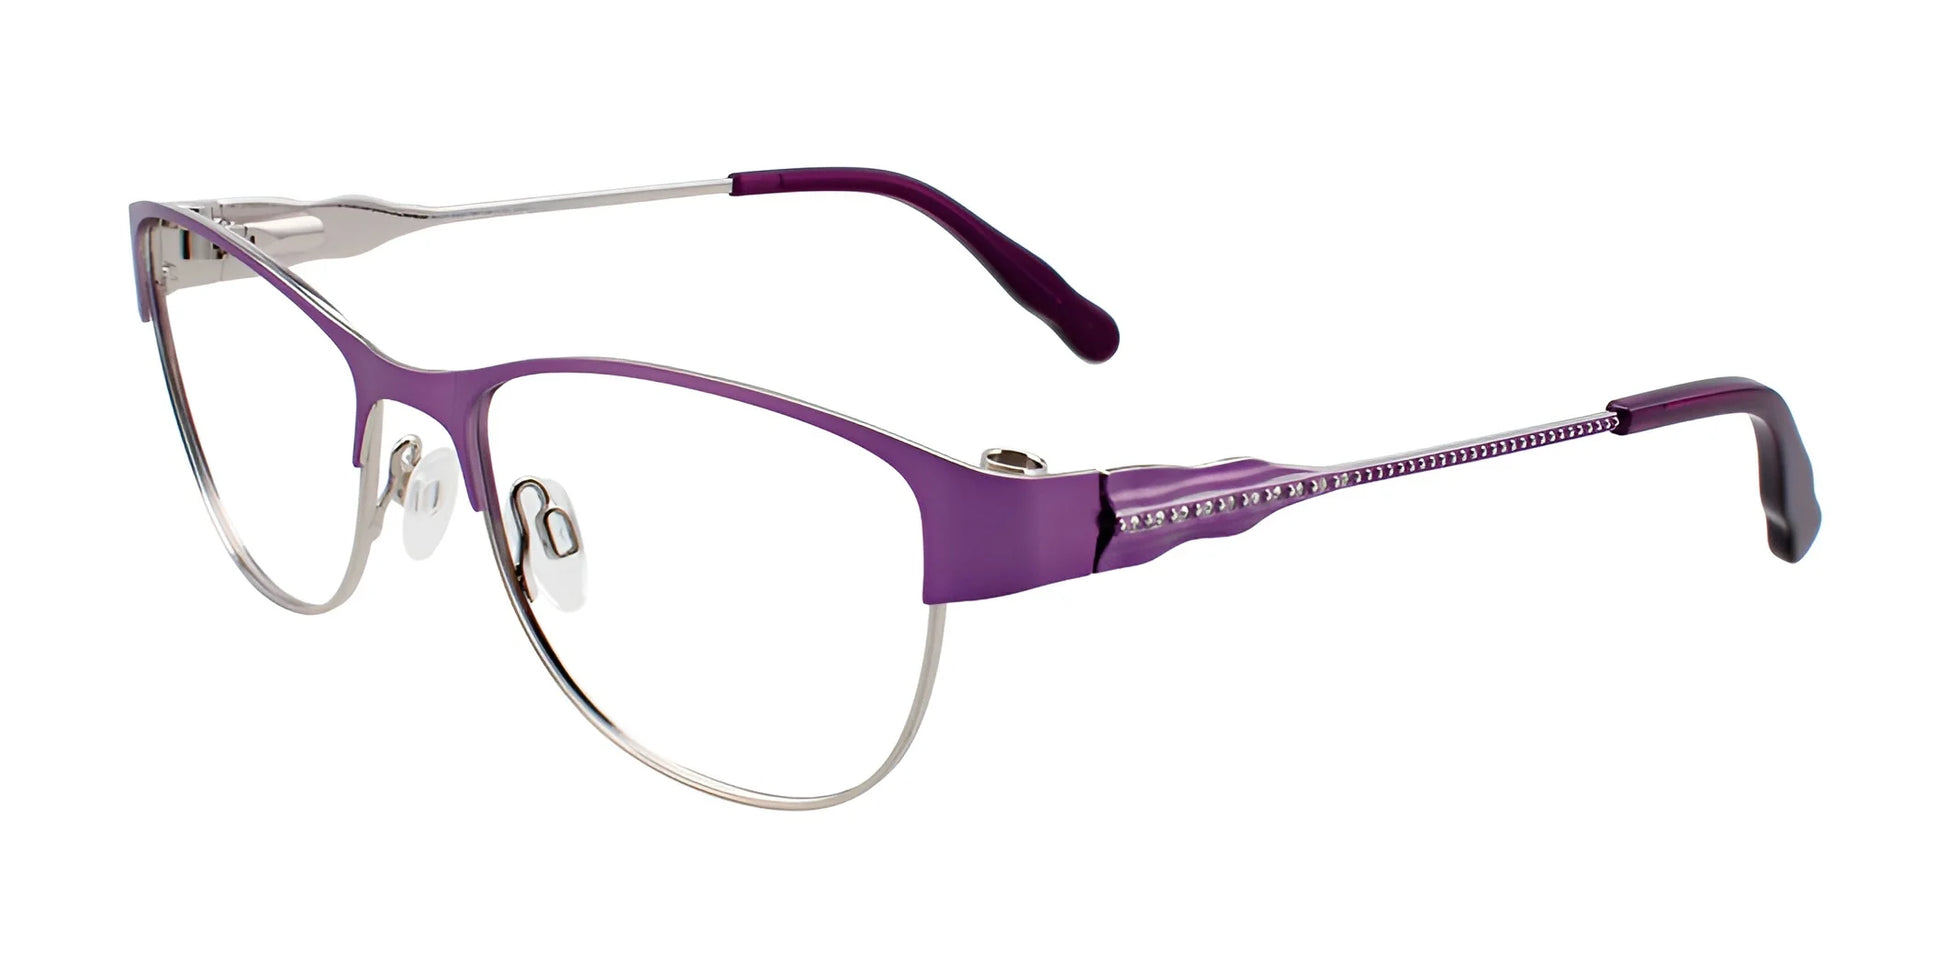 EasyClip EC405 Eyeglasses Satin Light Lavender & Shiny Silver